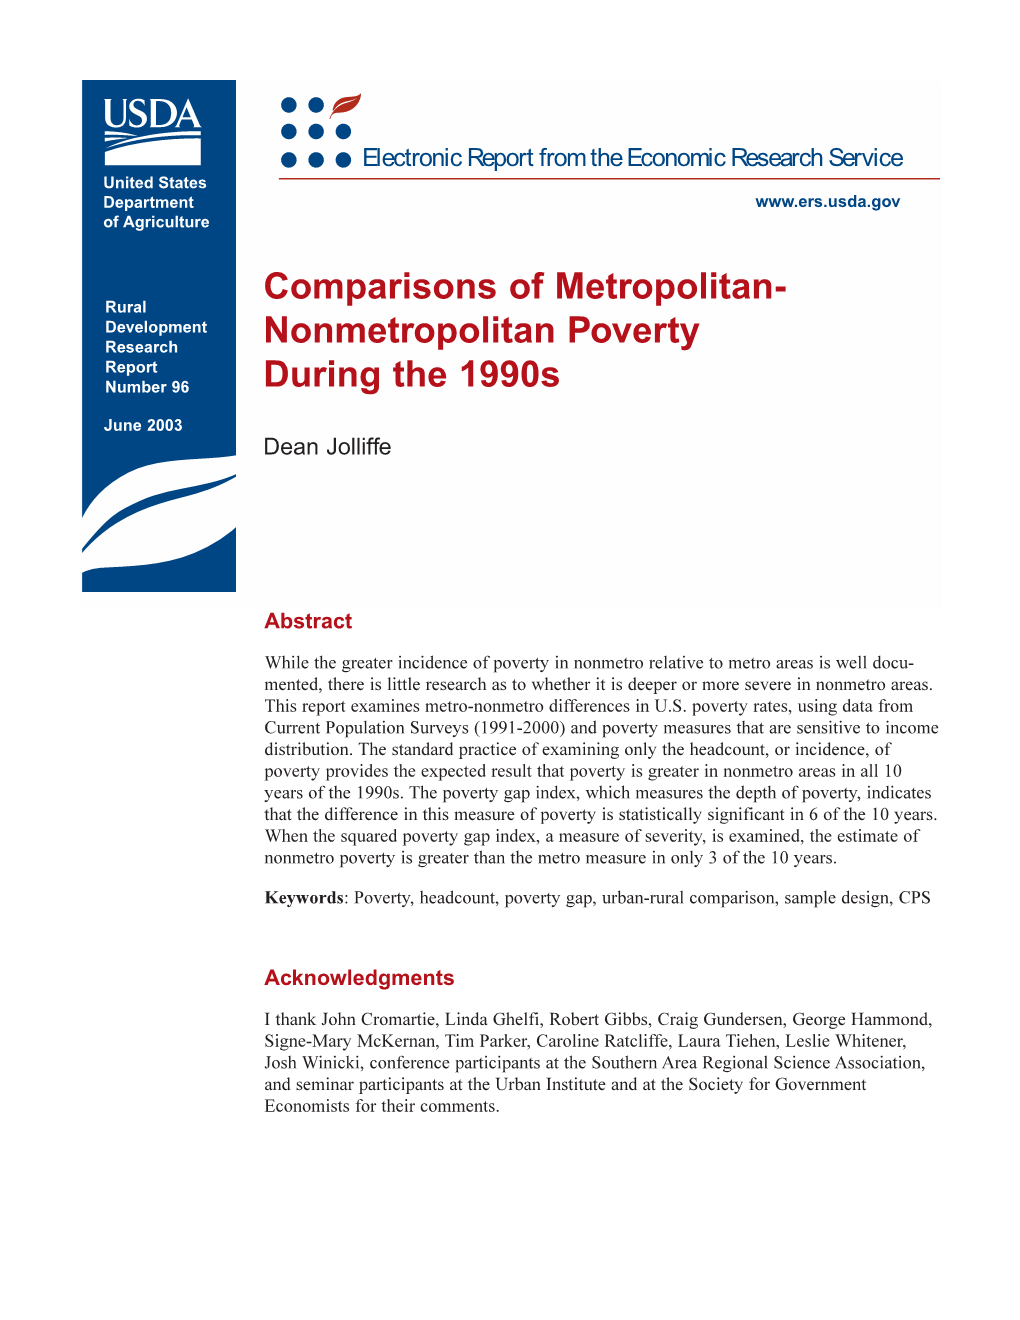 Comparisons of Metropolitan-Nonmetropolitan Poverty During the 1990S